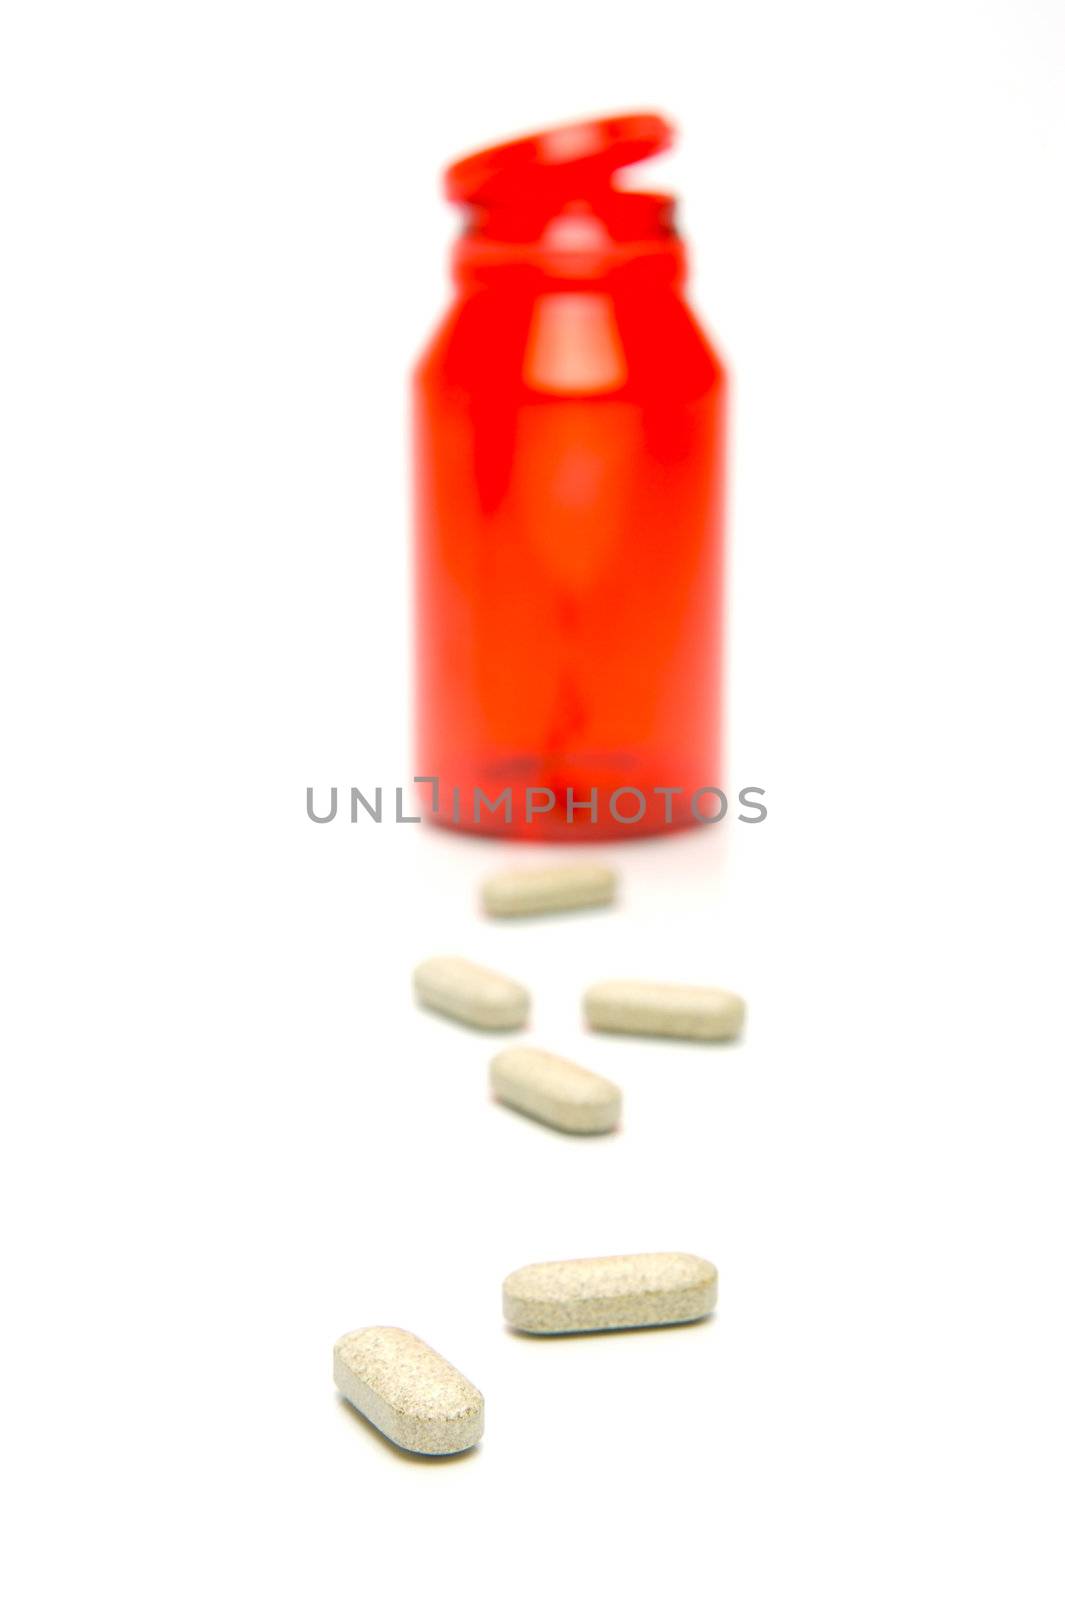 Prescription Tablets by Kitch